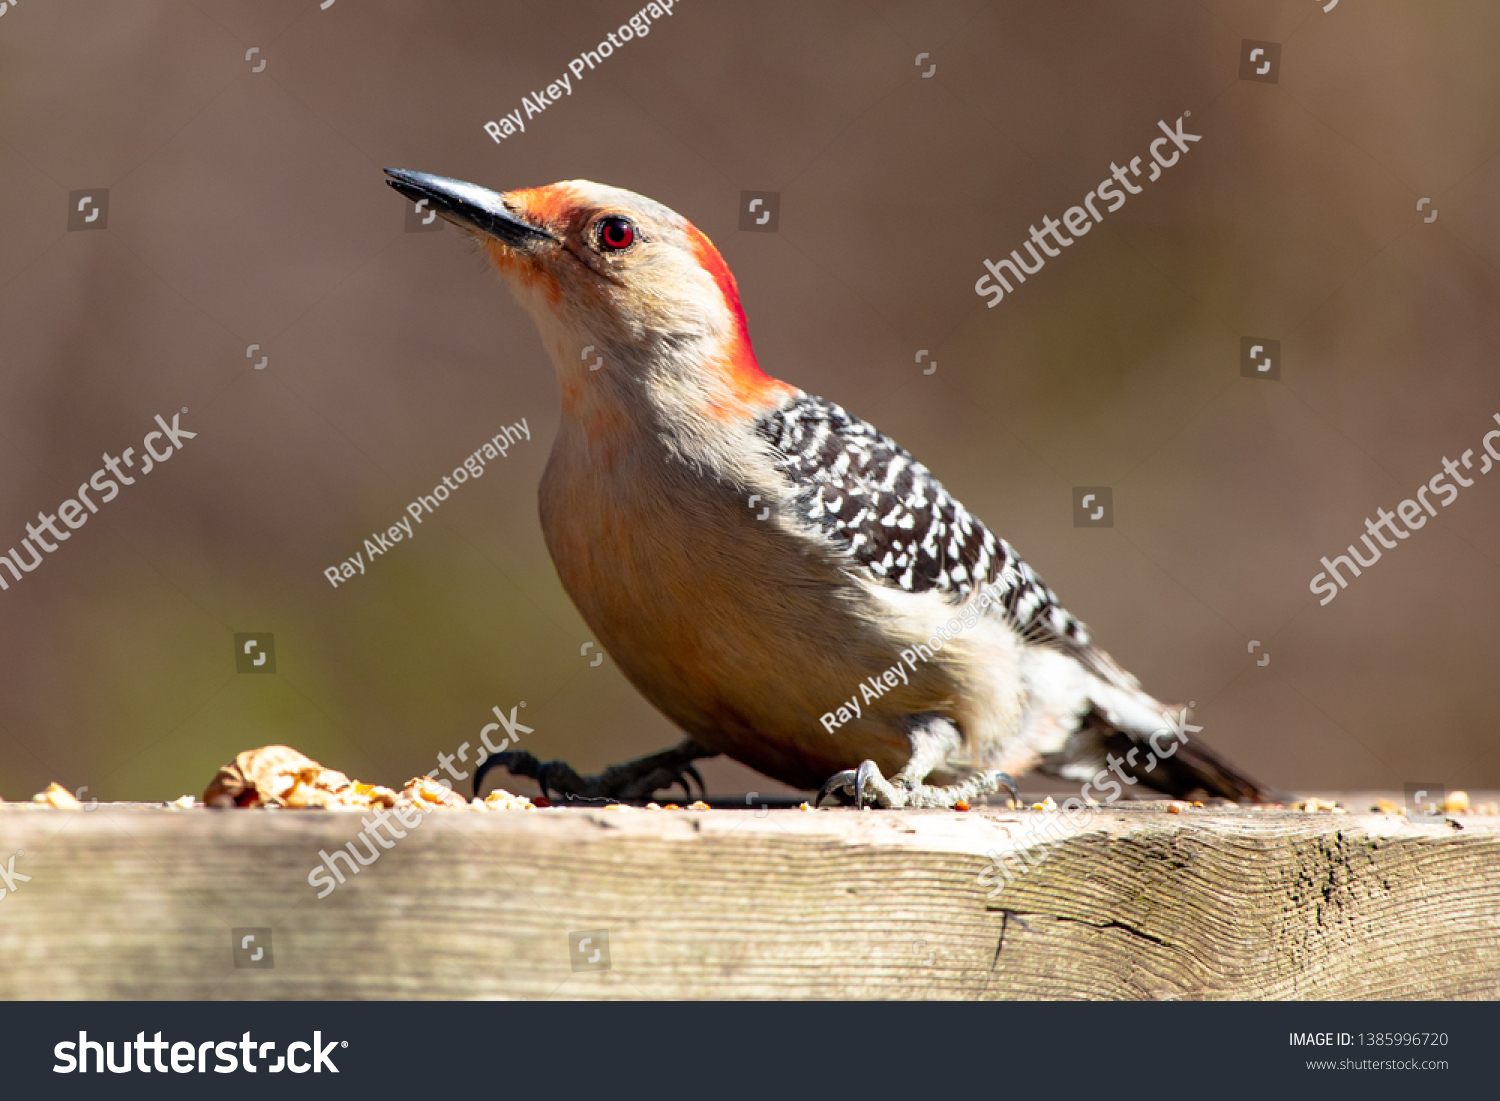 Fauna Avian Colourful Colorful Bird Birds Red Bellied Woodpecker #1385996720